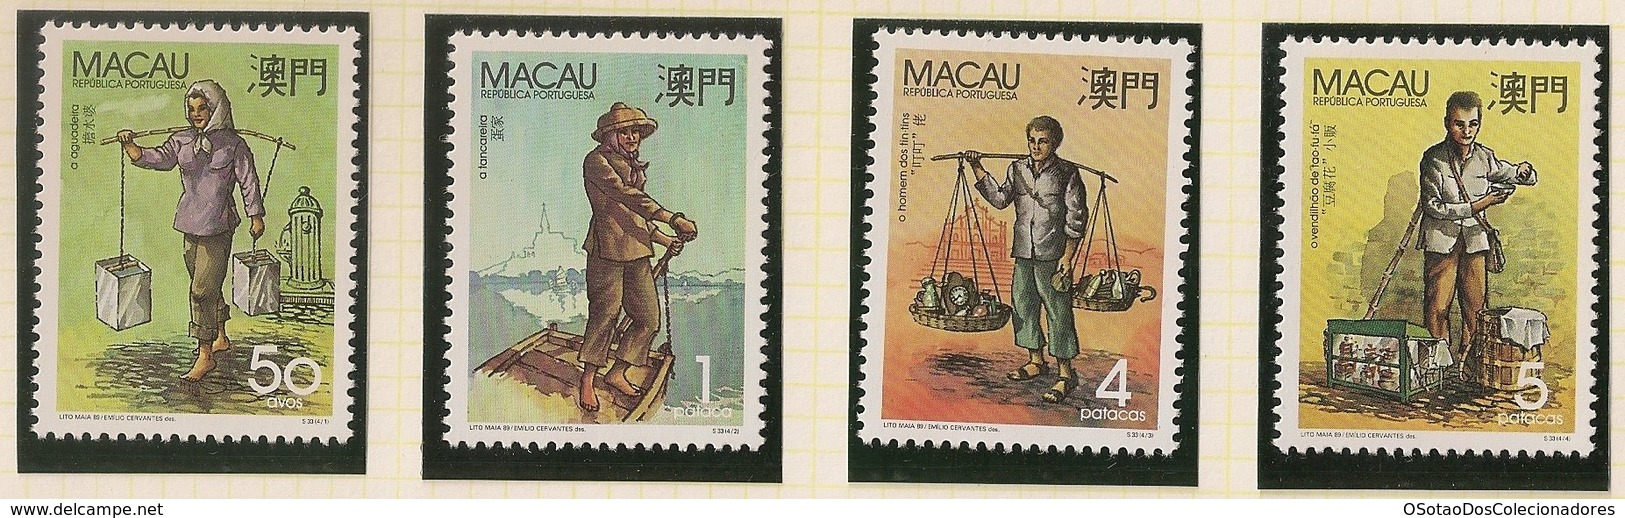 Macau Portugal China Chine 1989 - Profissões Tipicas - Traditional Occupations - Set Complete - MNH/Neuf - Neufs